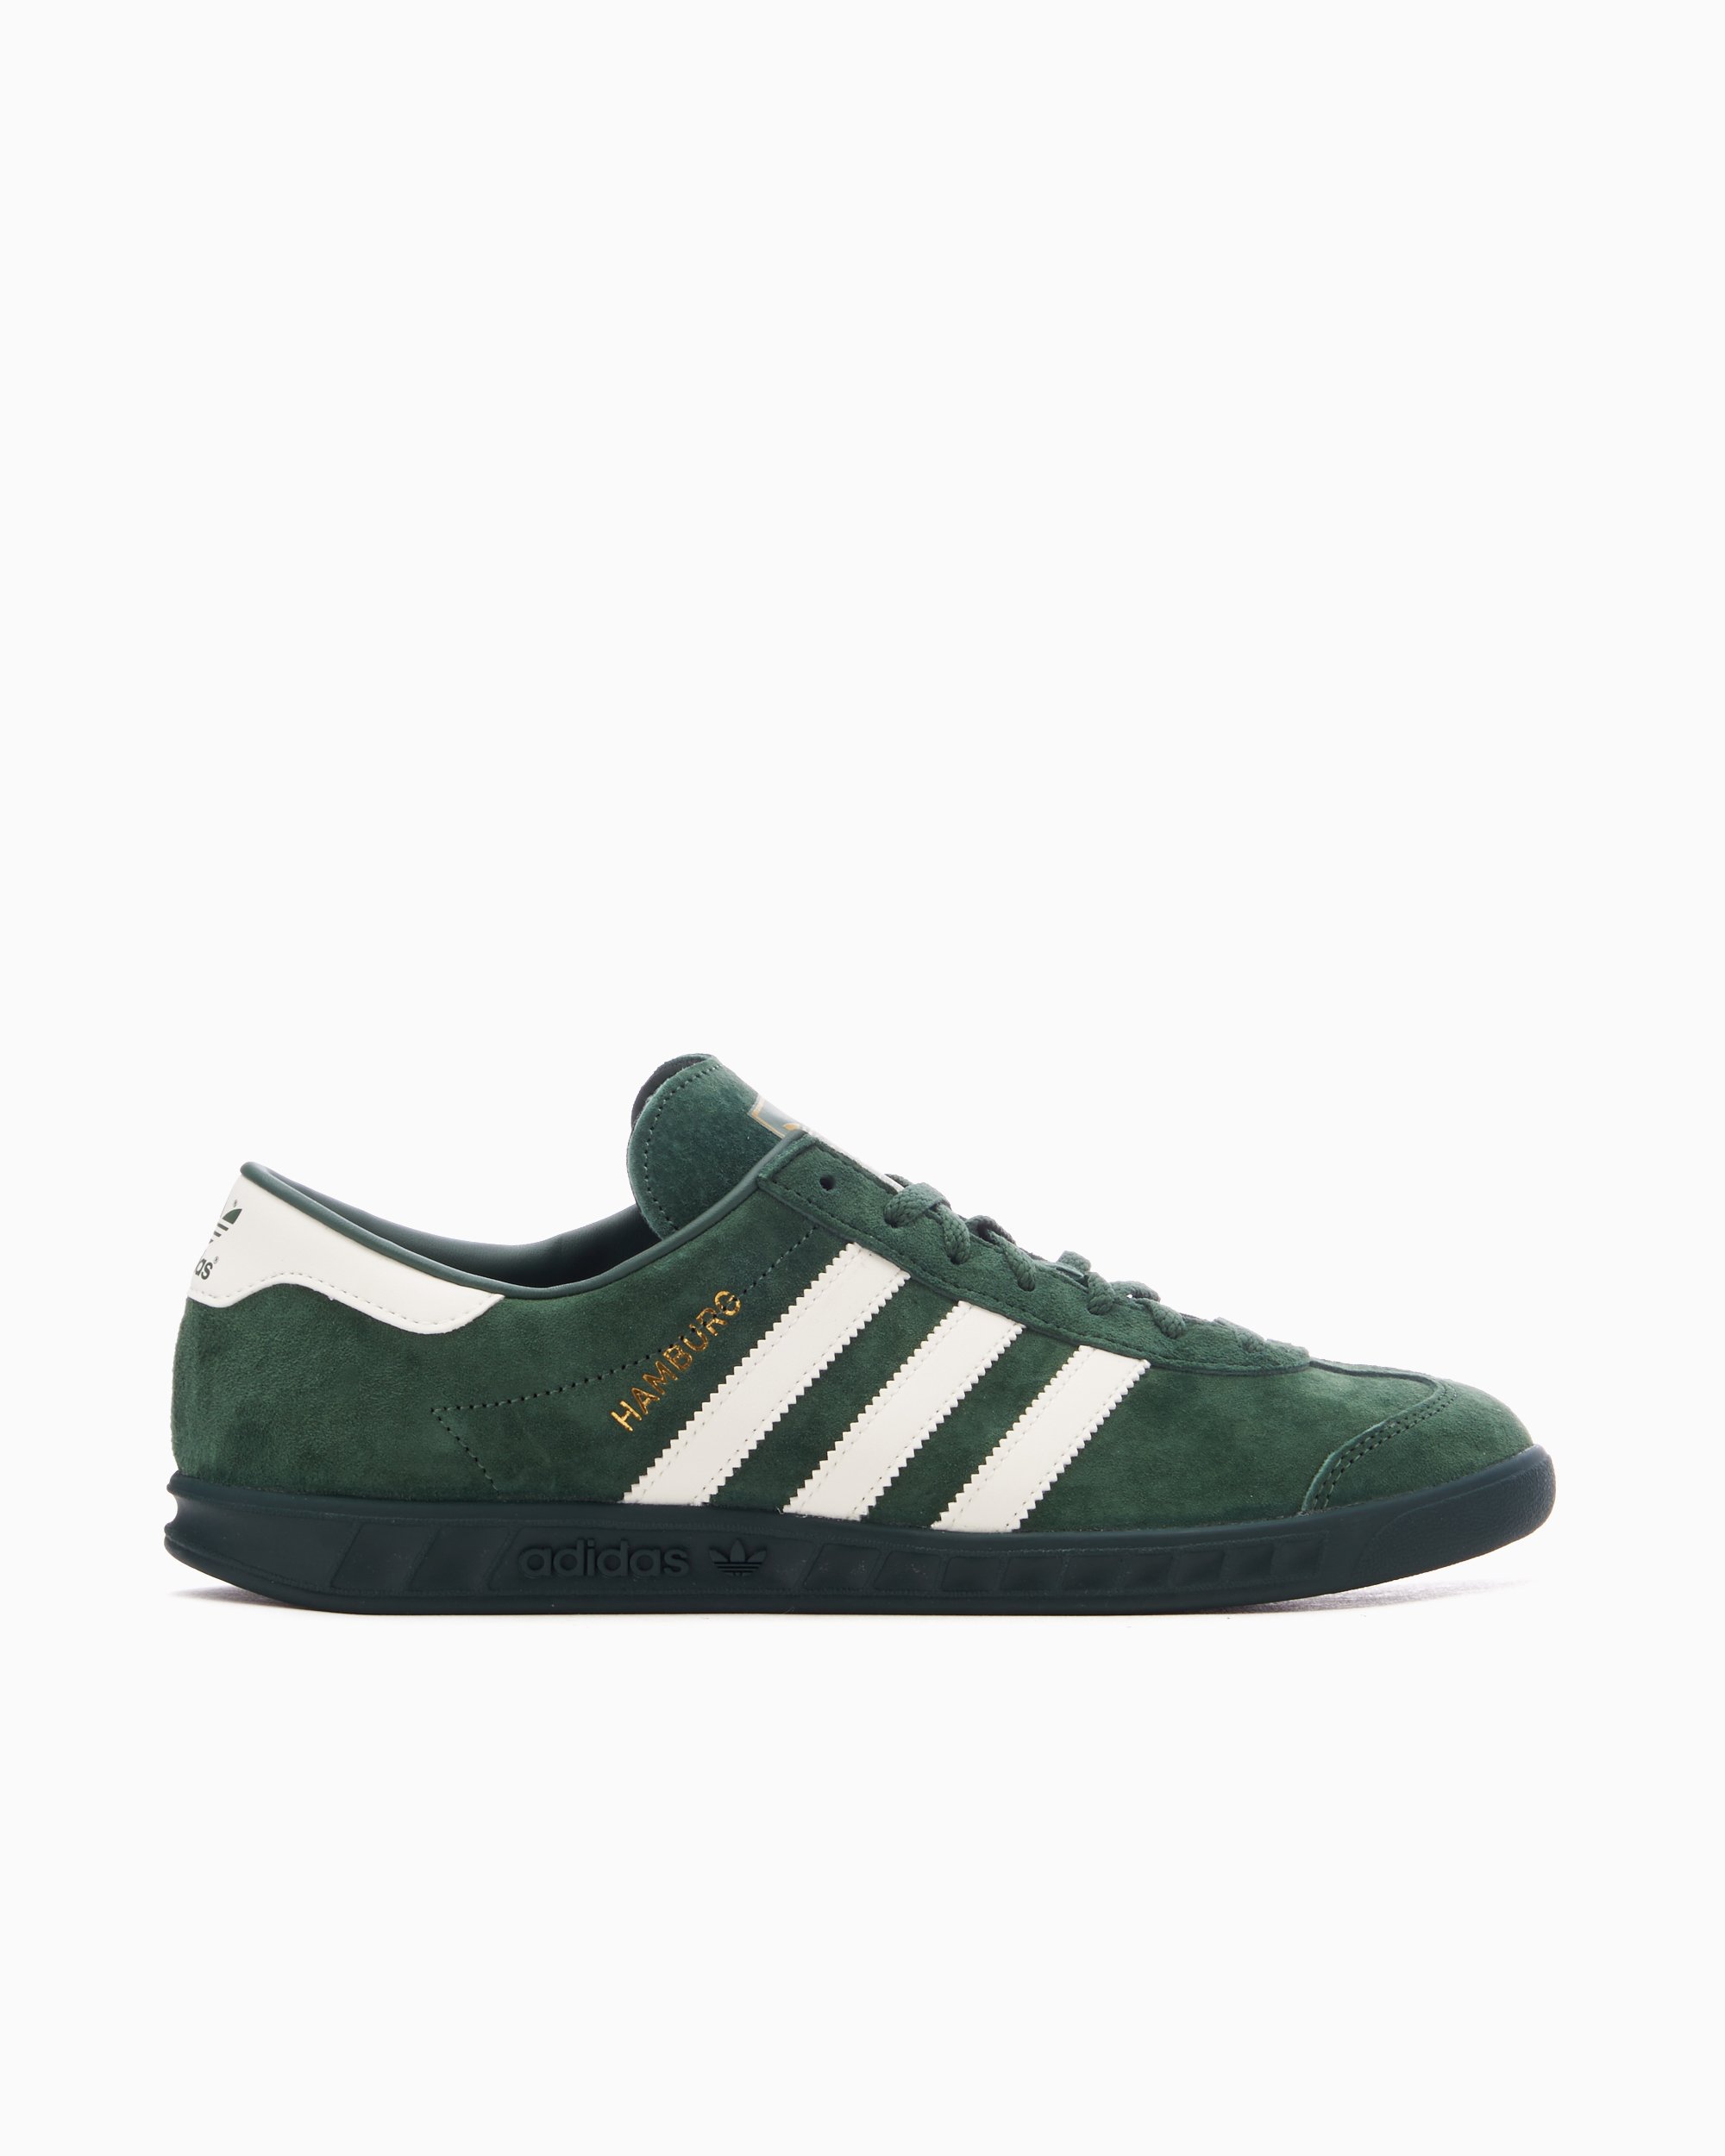 adidas Originals Hamburg Green GW9641| Buy Online at FOOTDISTRICT